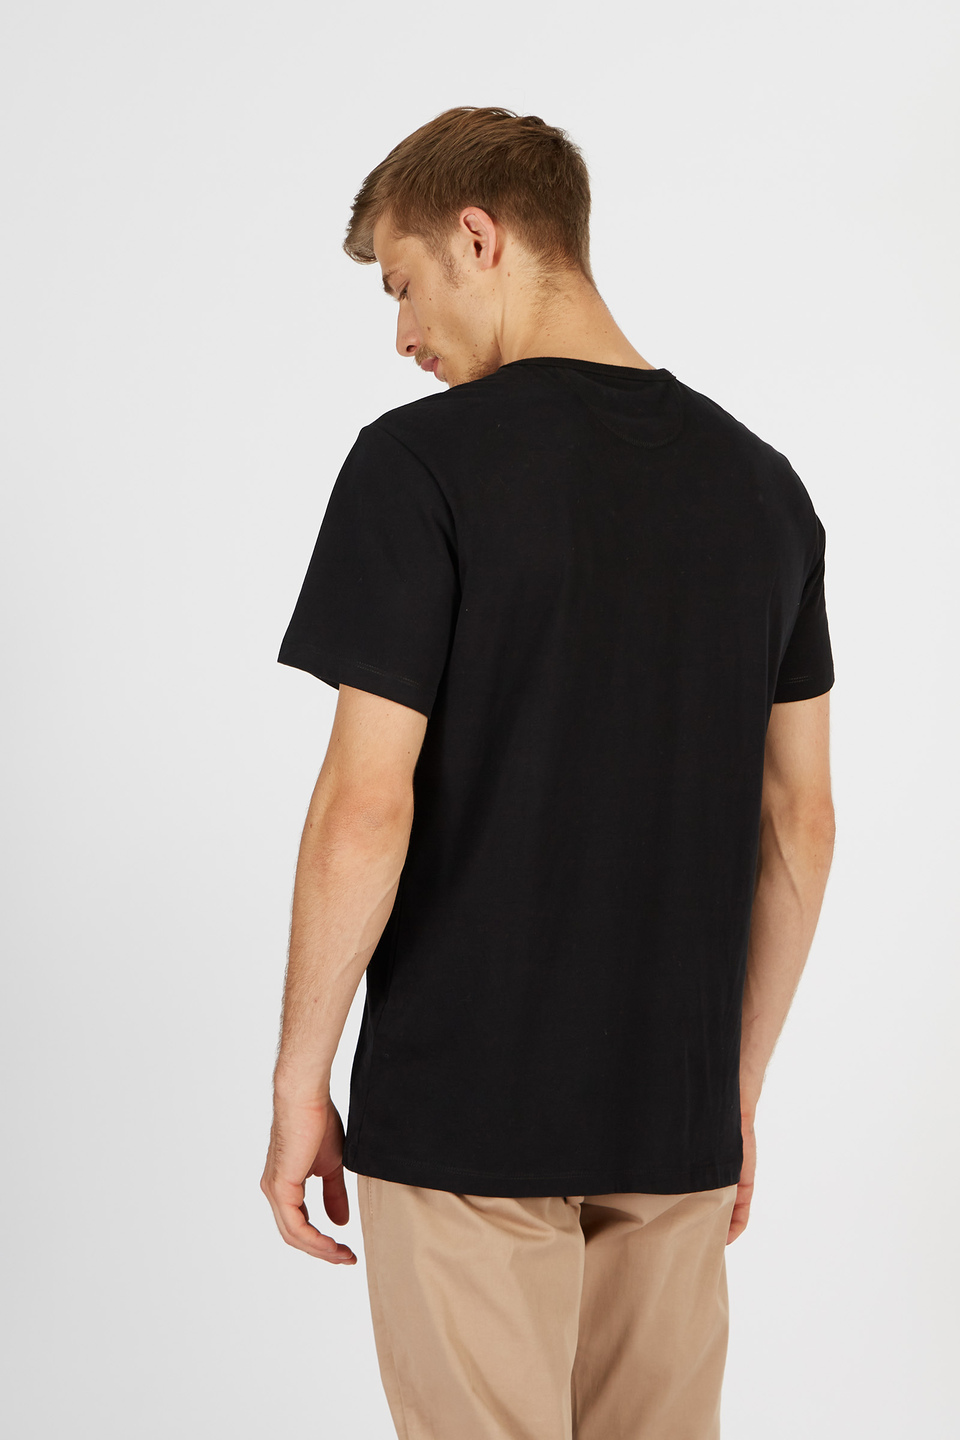 Kurzarm-T-Shirt aus Baumwolle mit 100% Komfort | La Martina - Official Online Shop